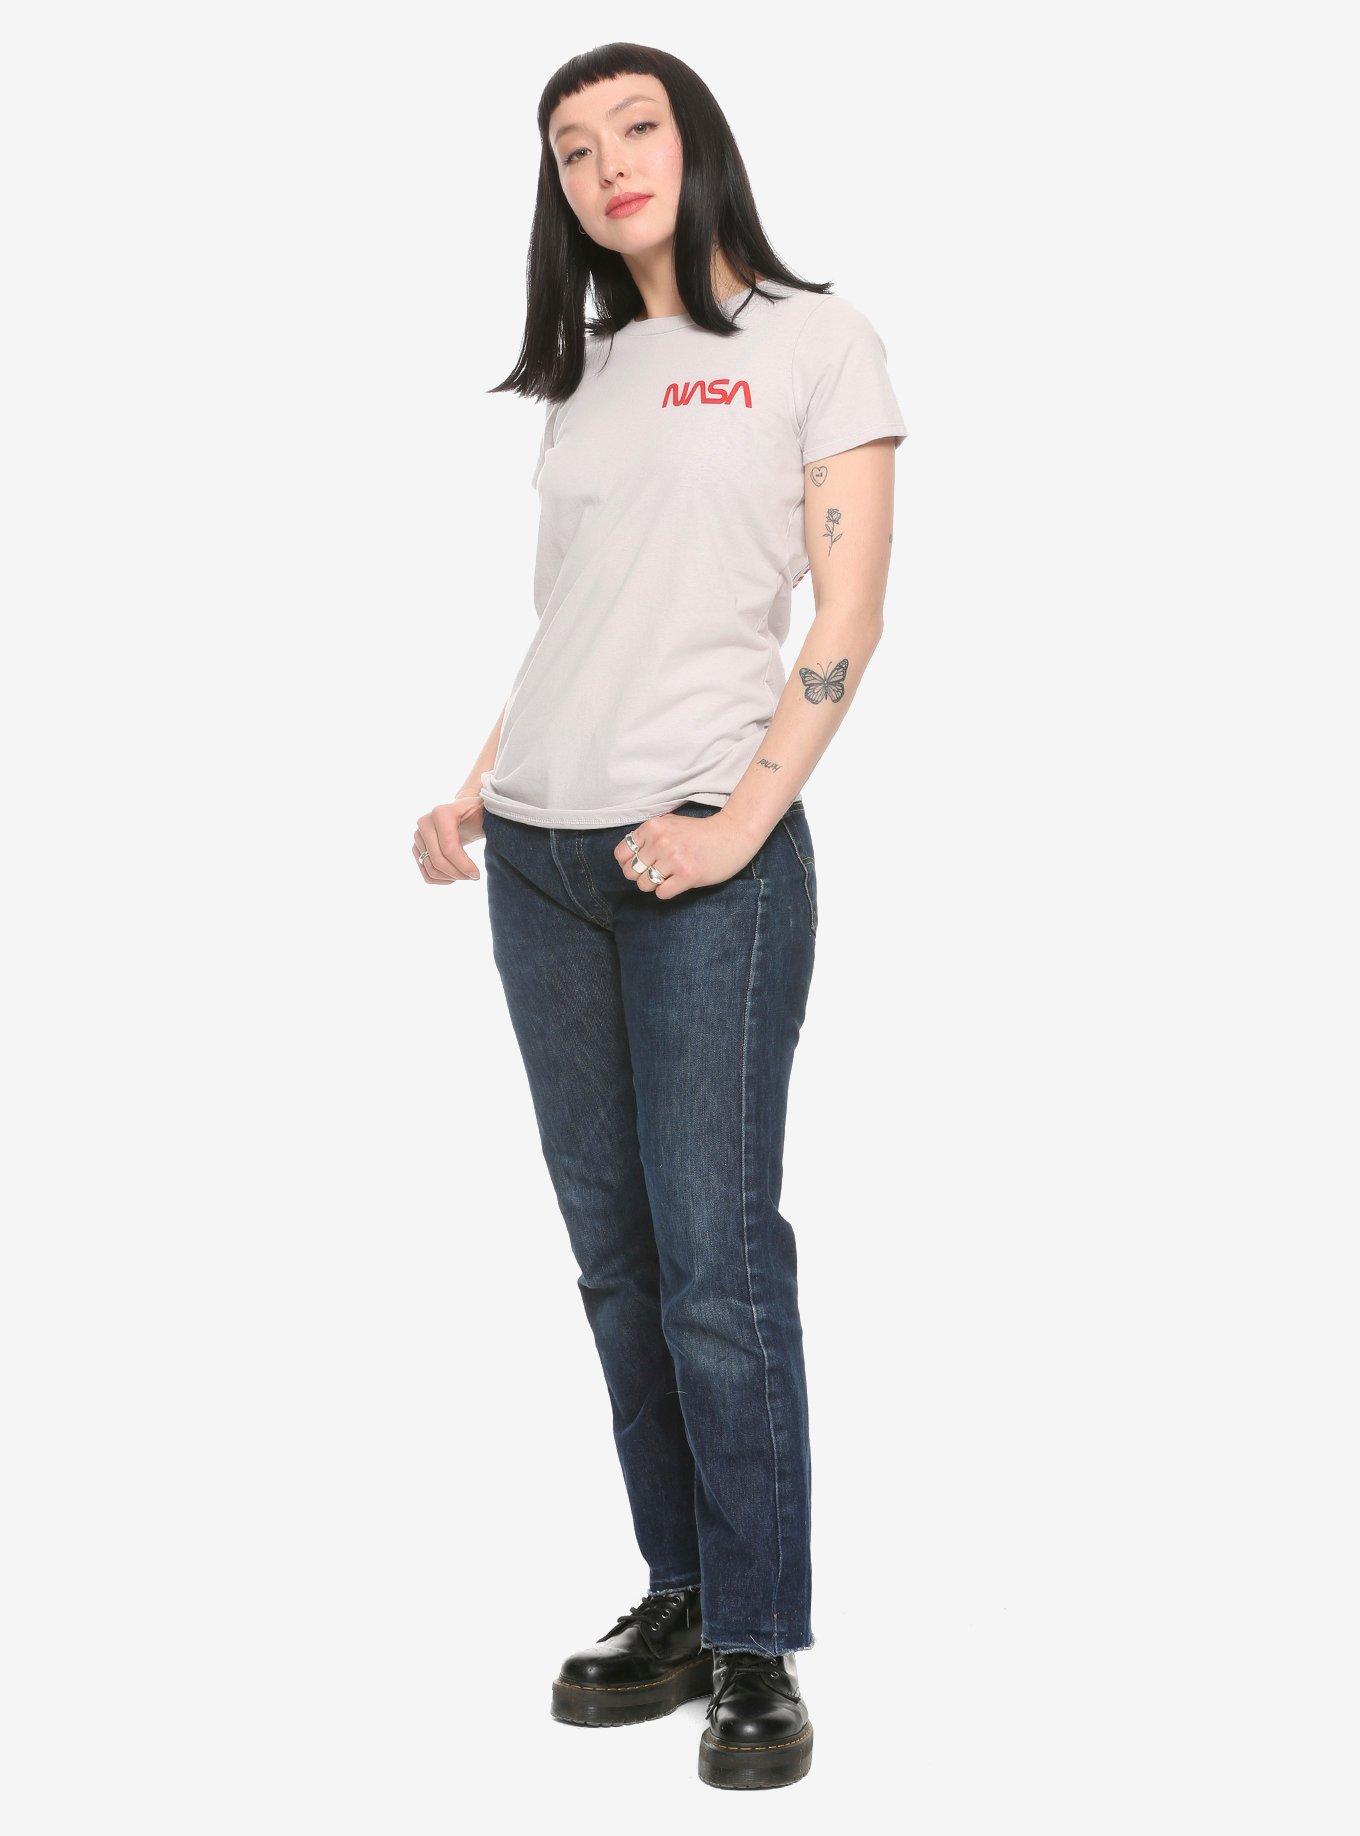 NASA Space Camp Girls T-Shirt, MULTI, alternate